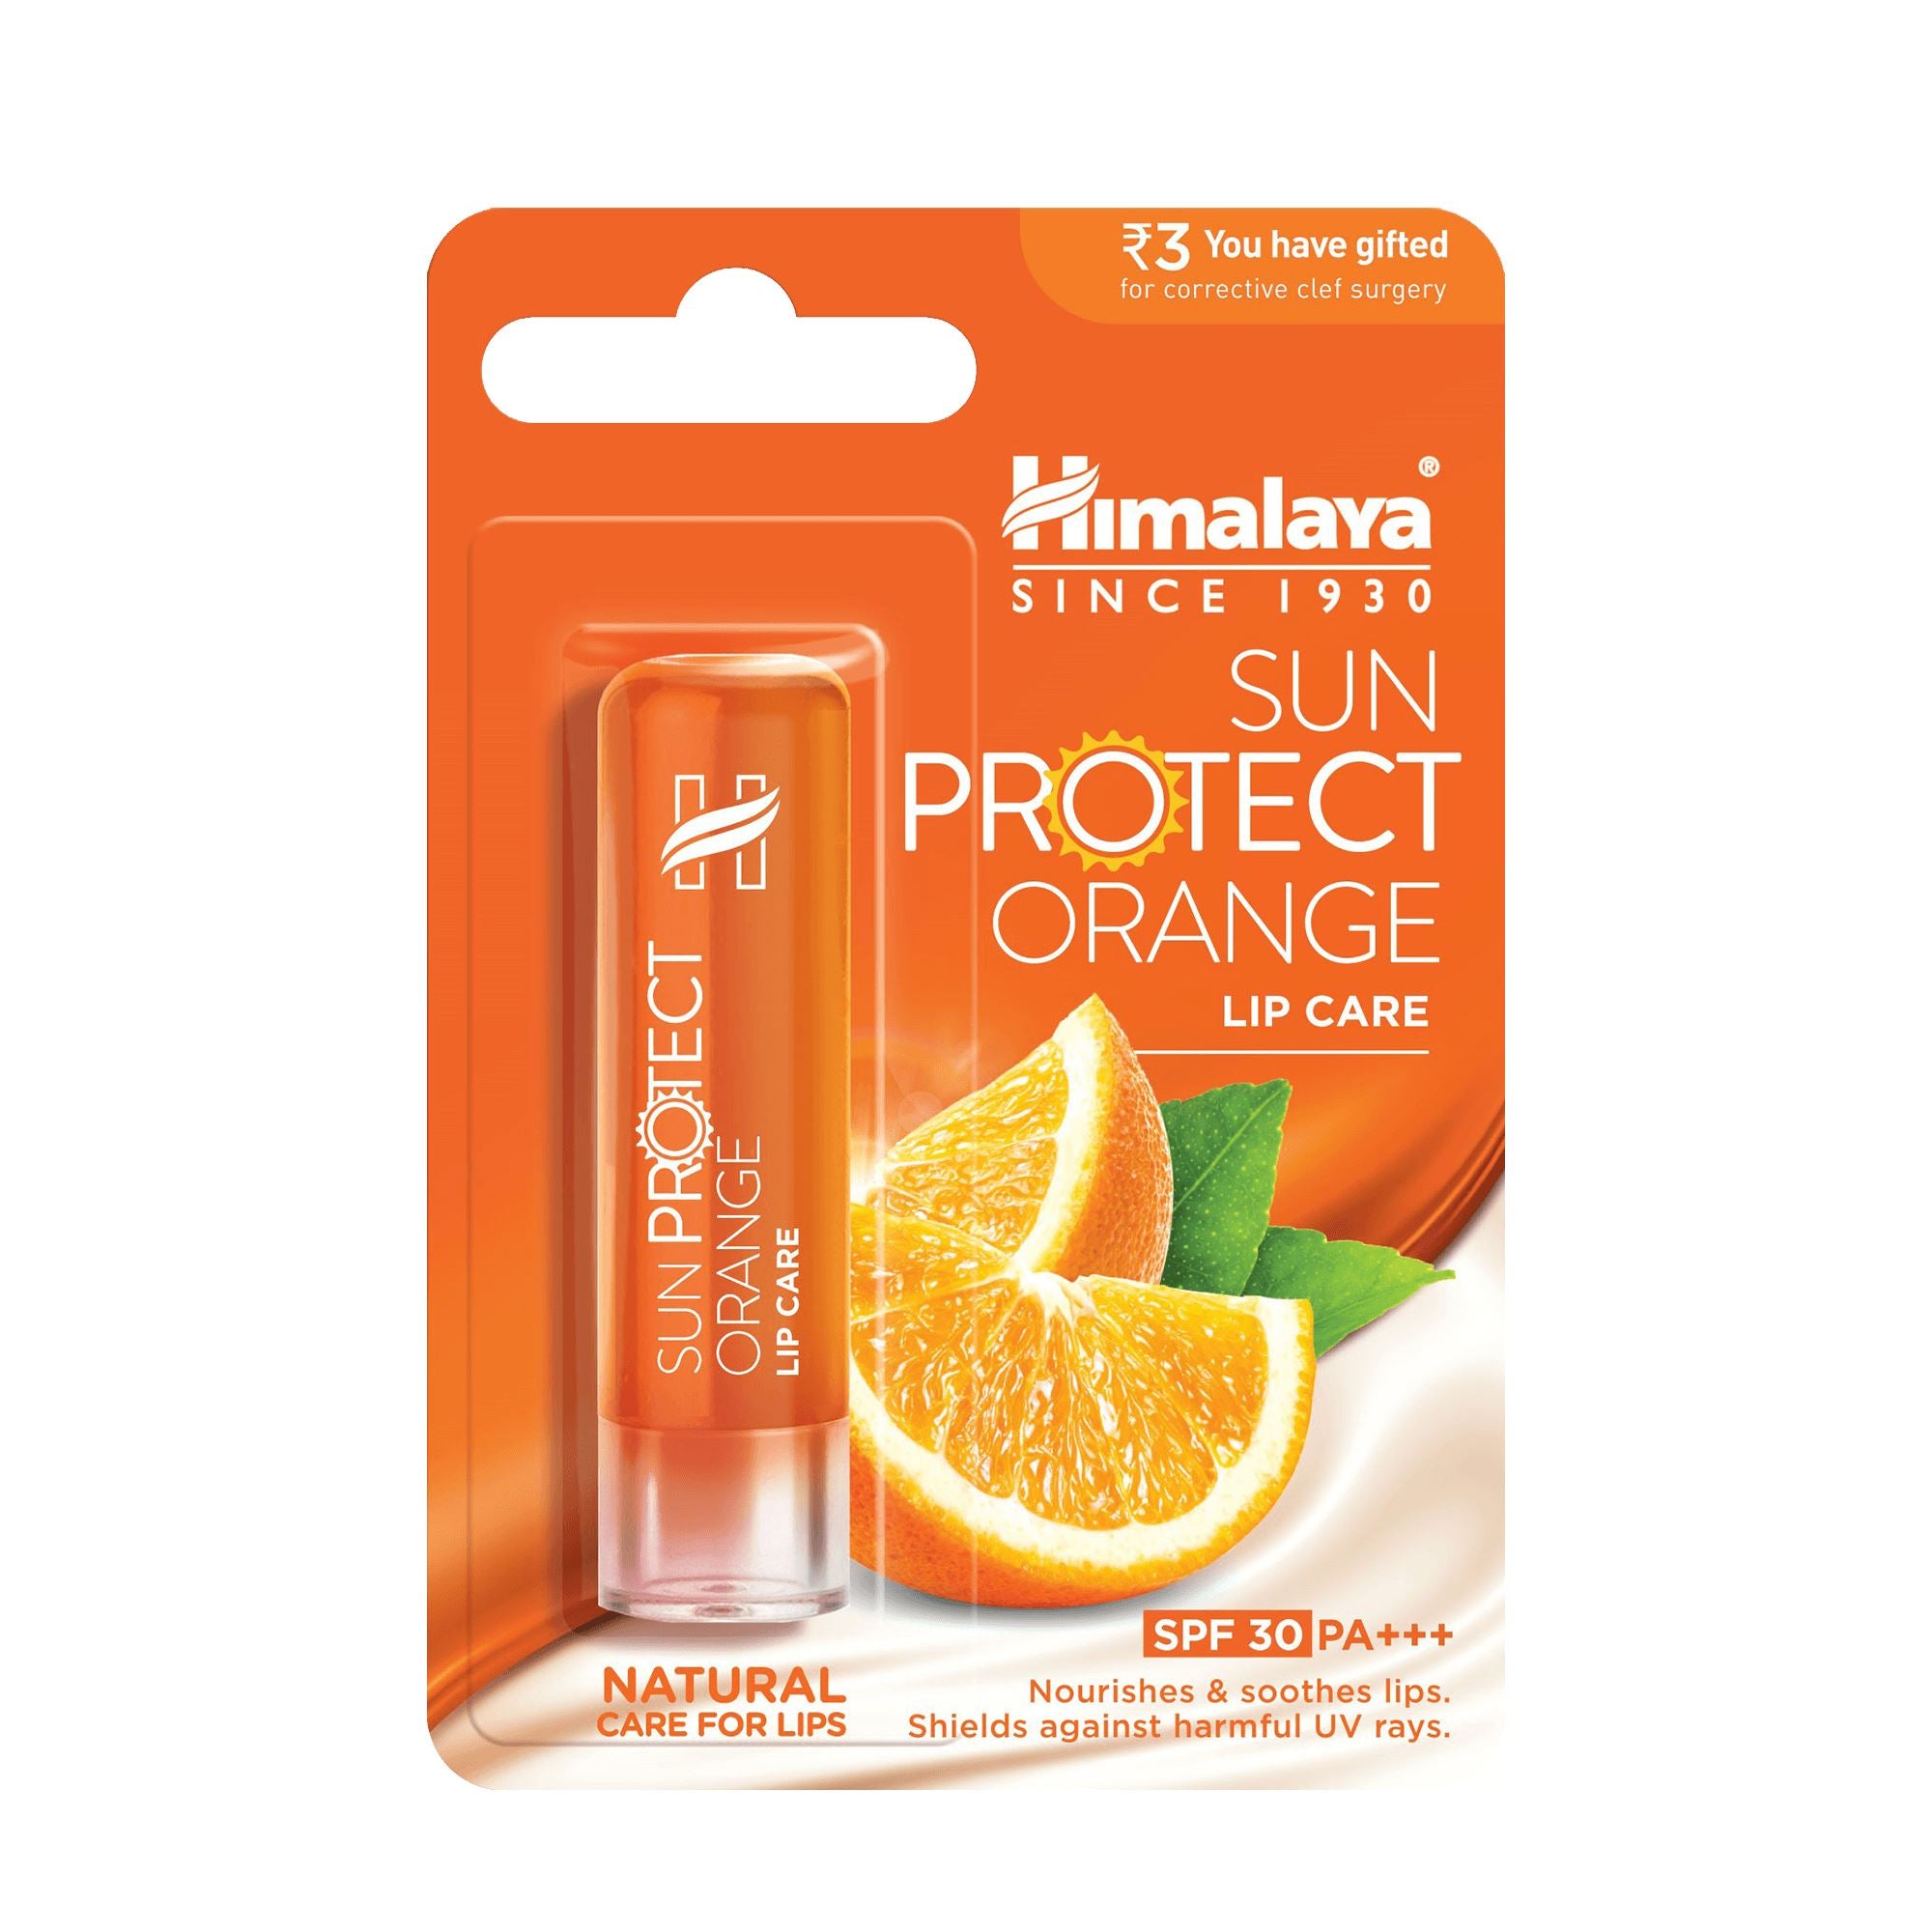 Sun Protect Orange Lip Care